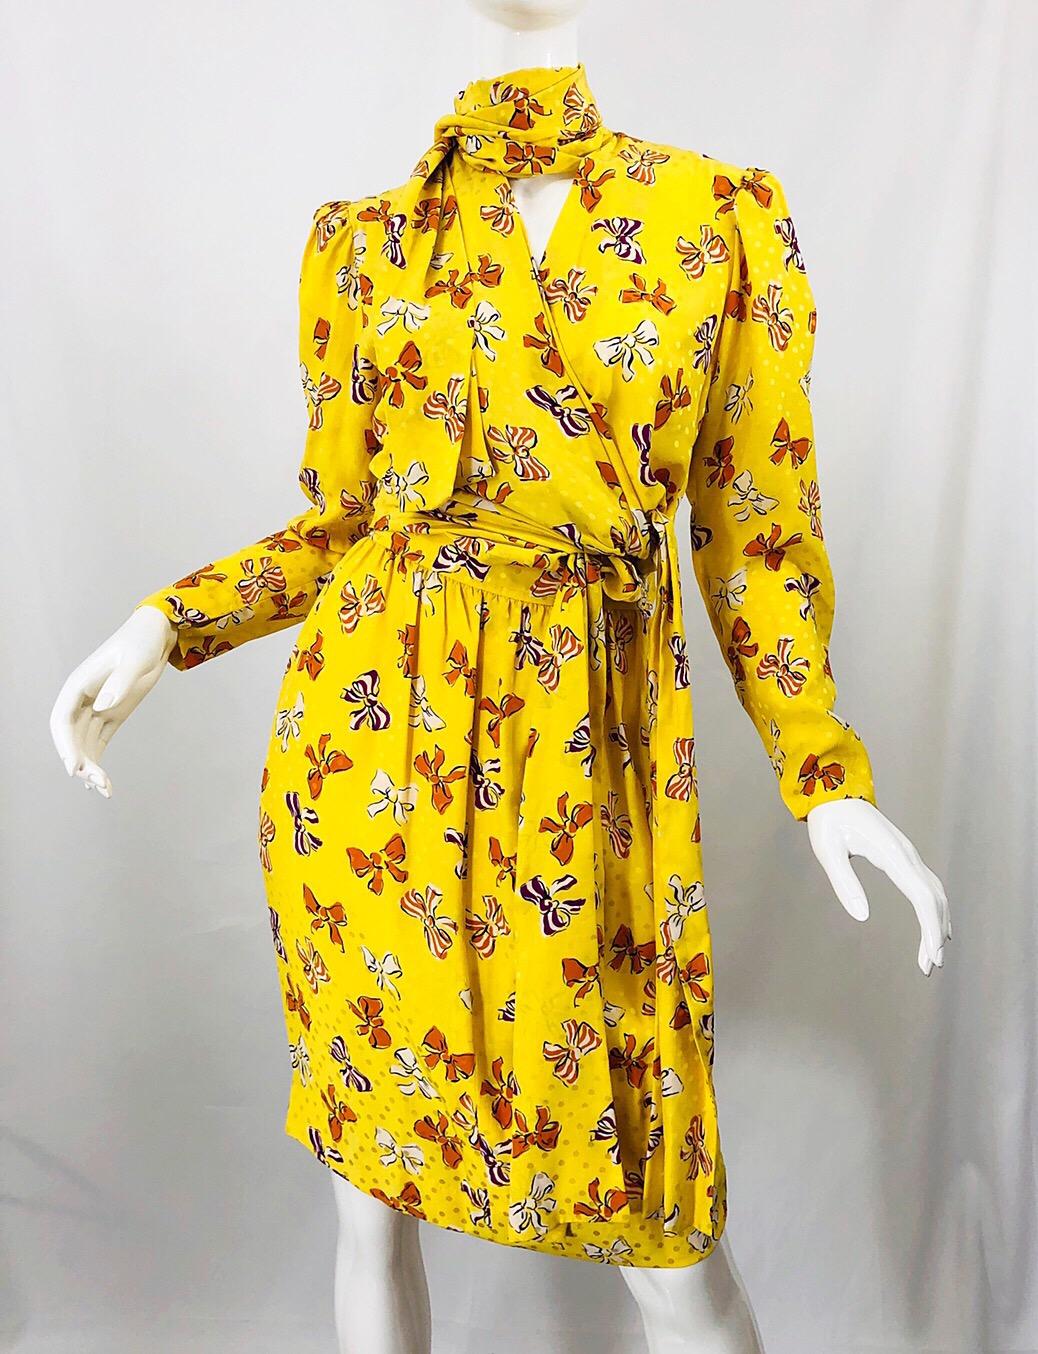 Yves Saint Laurent SS 1987 Runway YSL Yellow Bow Print Silk Blouse + Skirt Dress For Sale 9